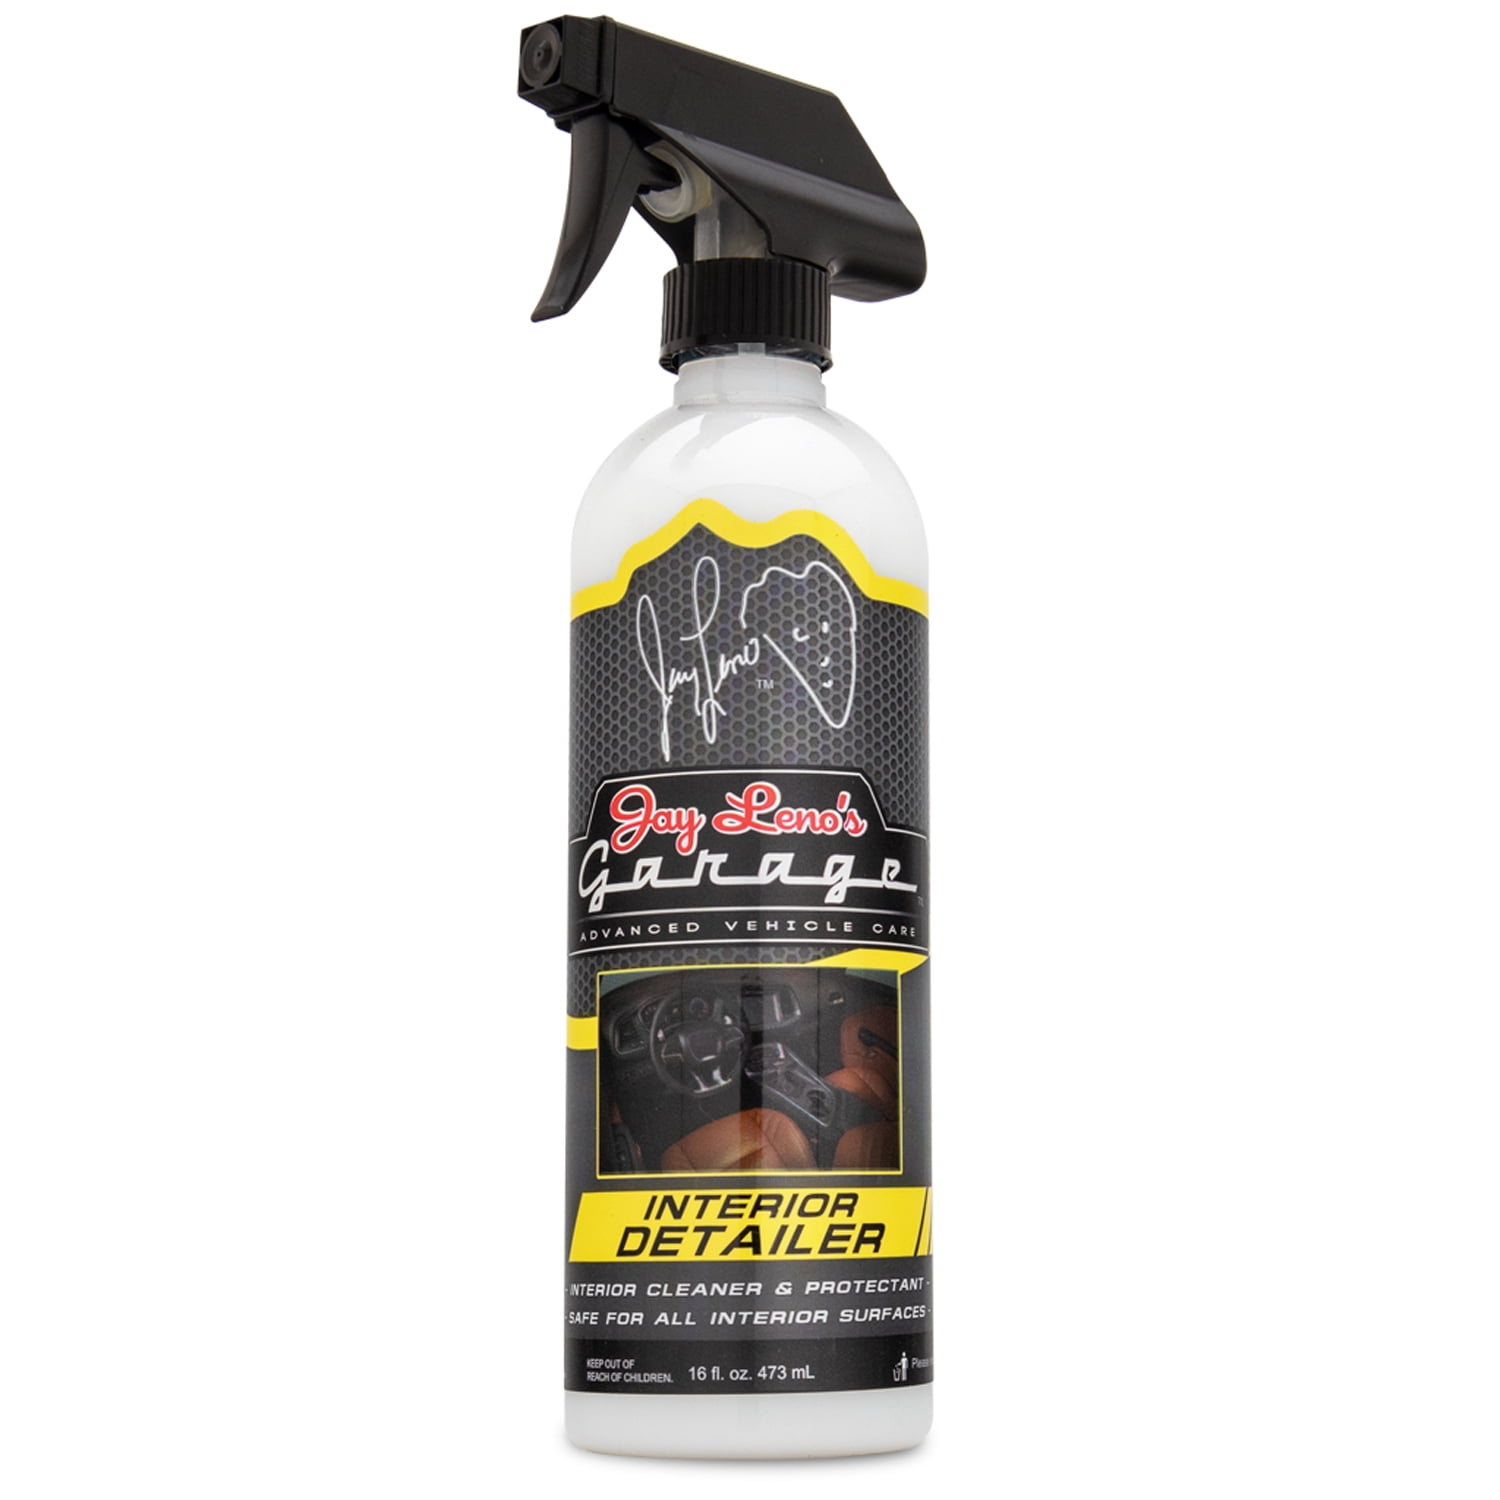 Jay Leno's Garage Interior Detailer (16 oz) - Clean & Protect Car Interior Surfaces